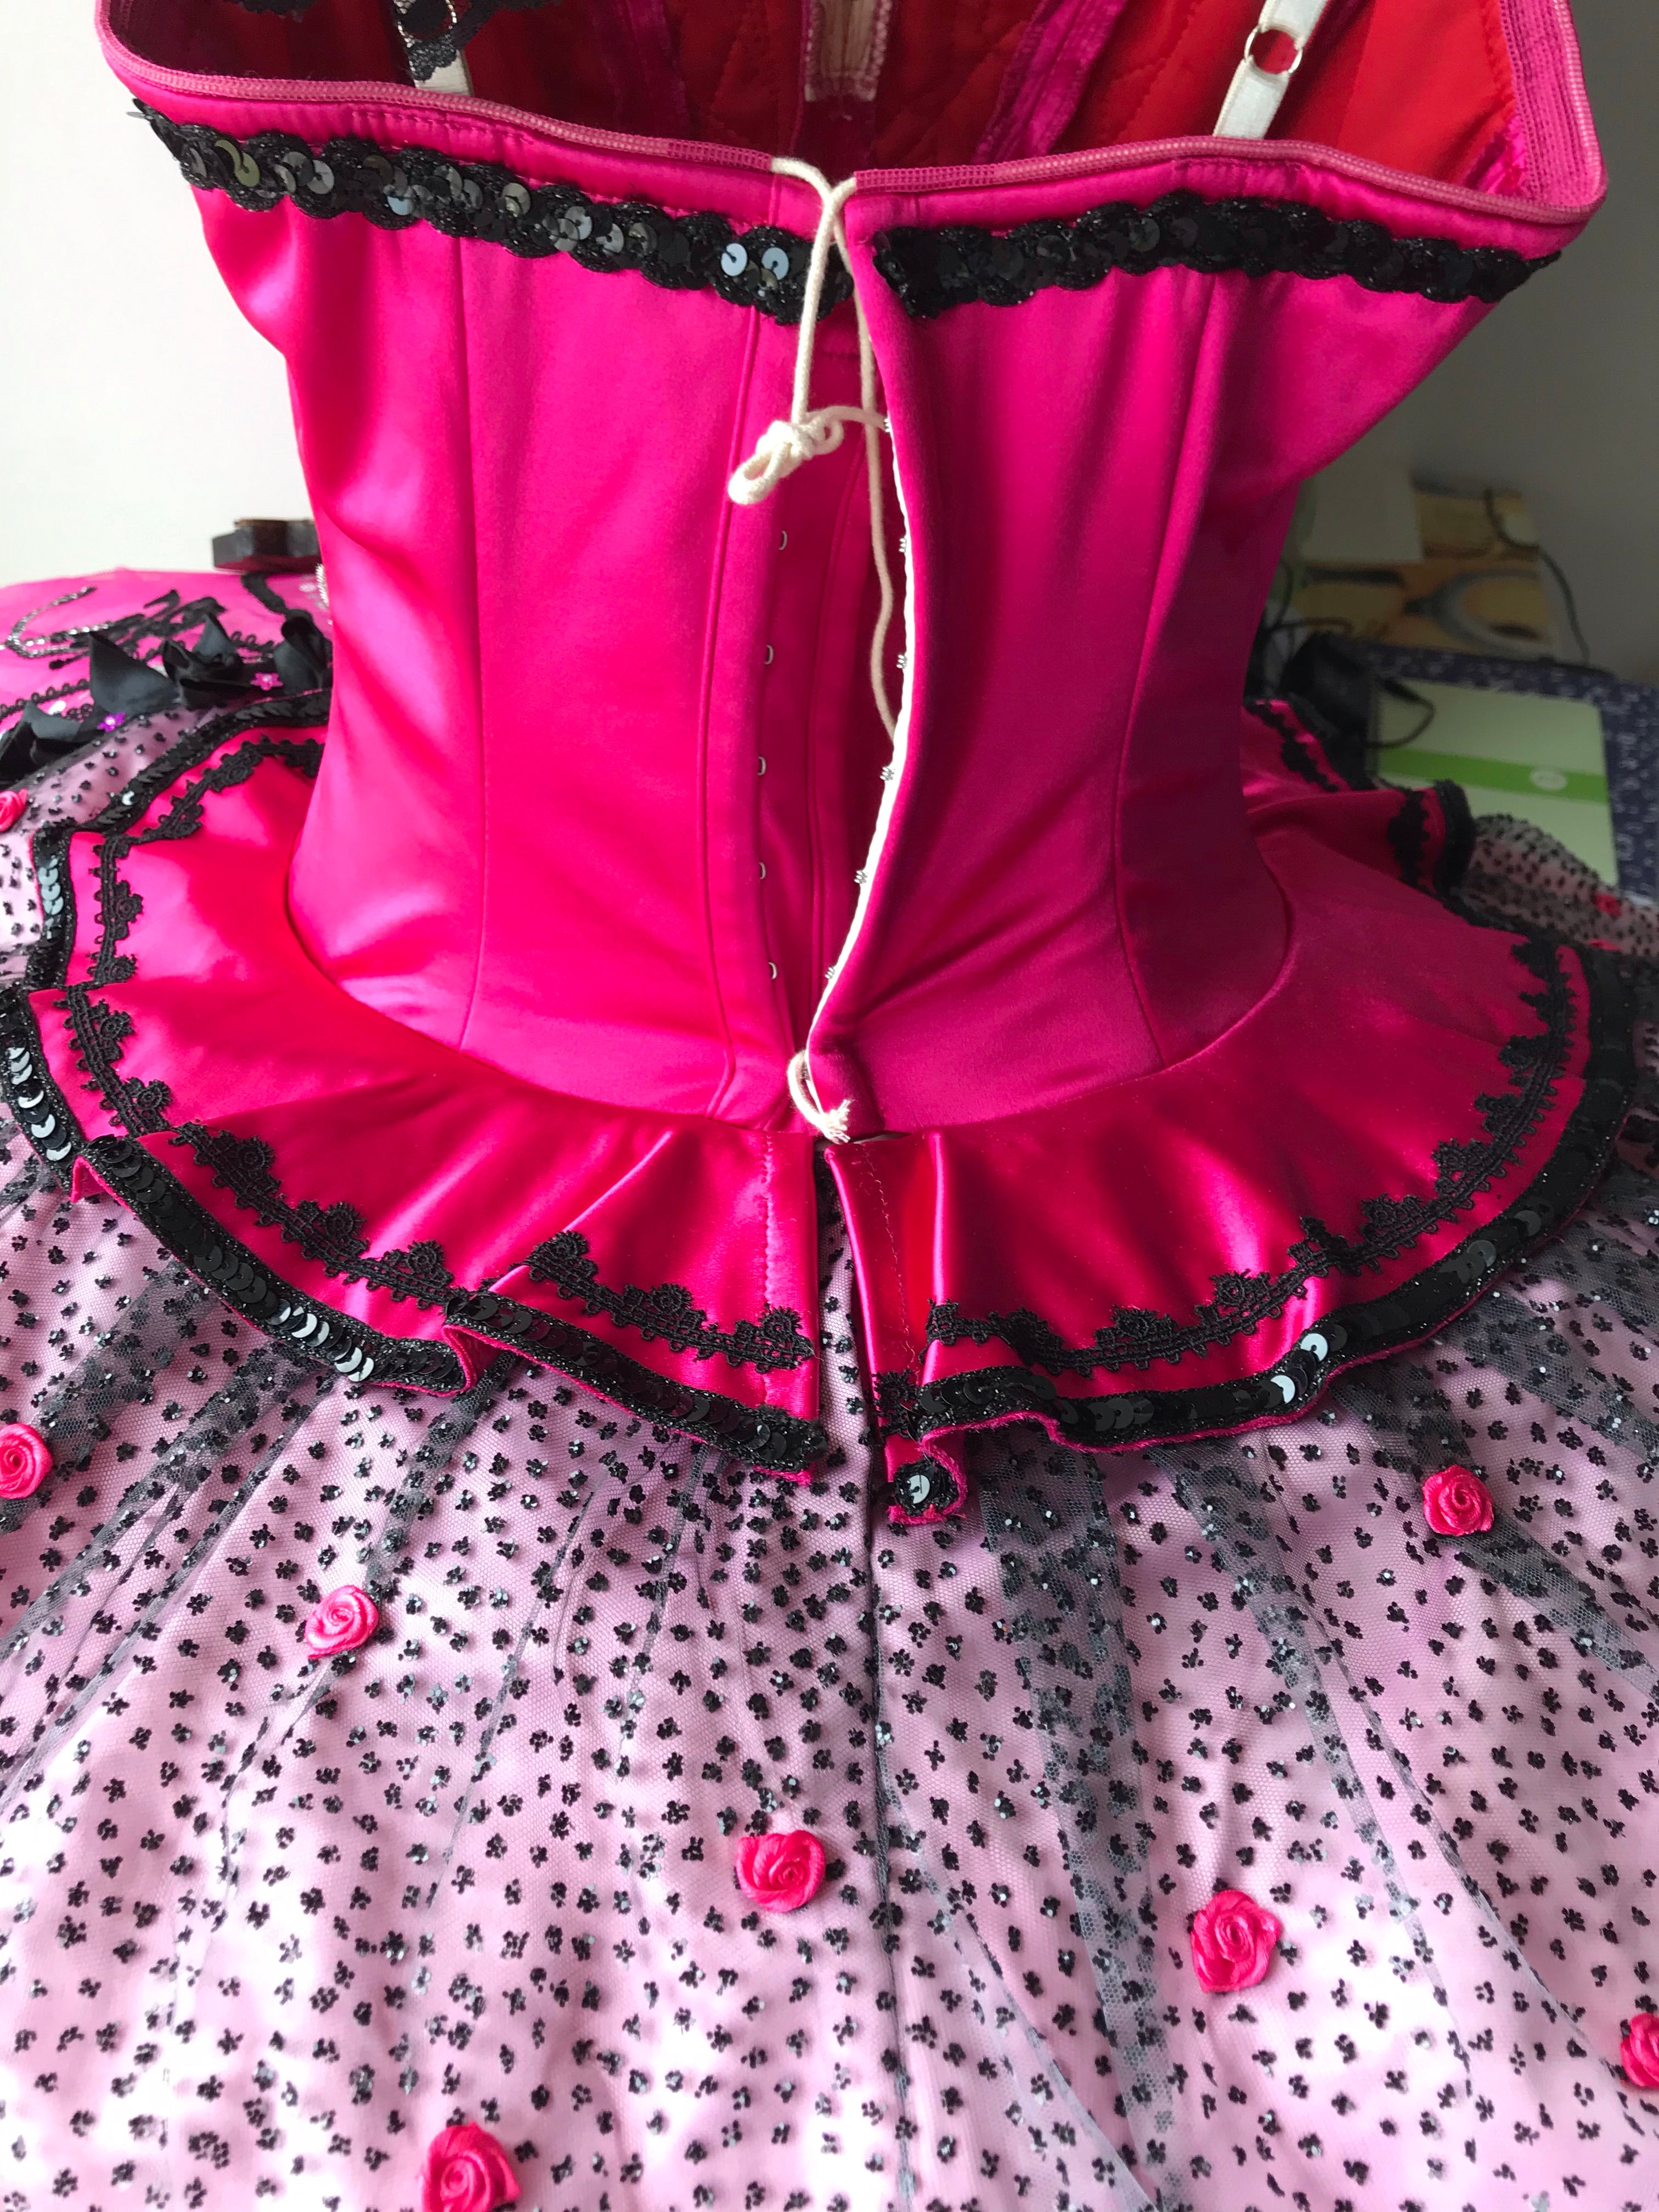 Professional Gypsy Style Hot Pink La Esmeralda Classical Ballet TuTu Costume YAGP Stage Dance wear With Hooks